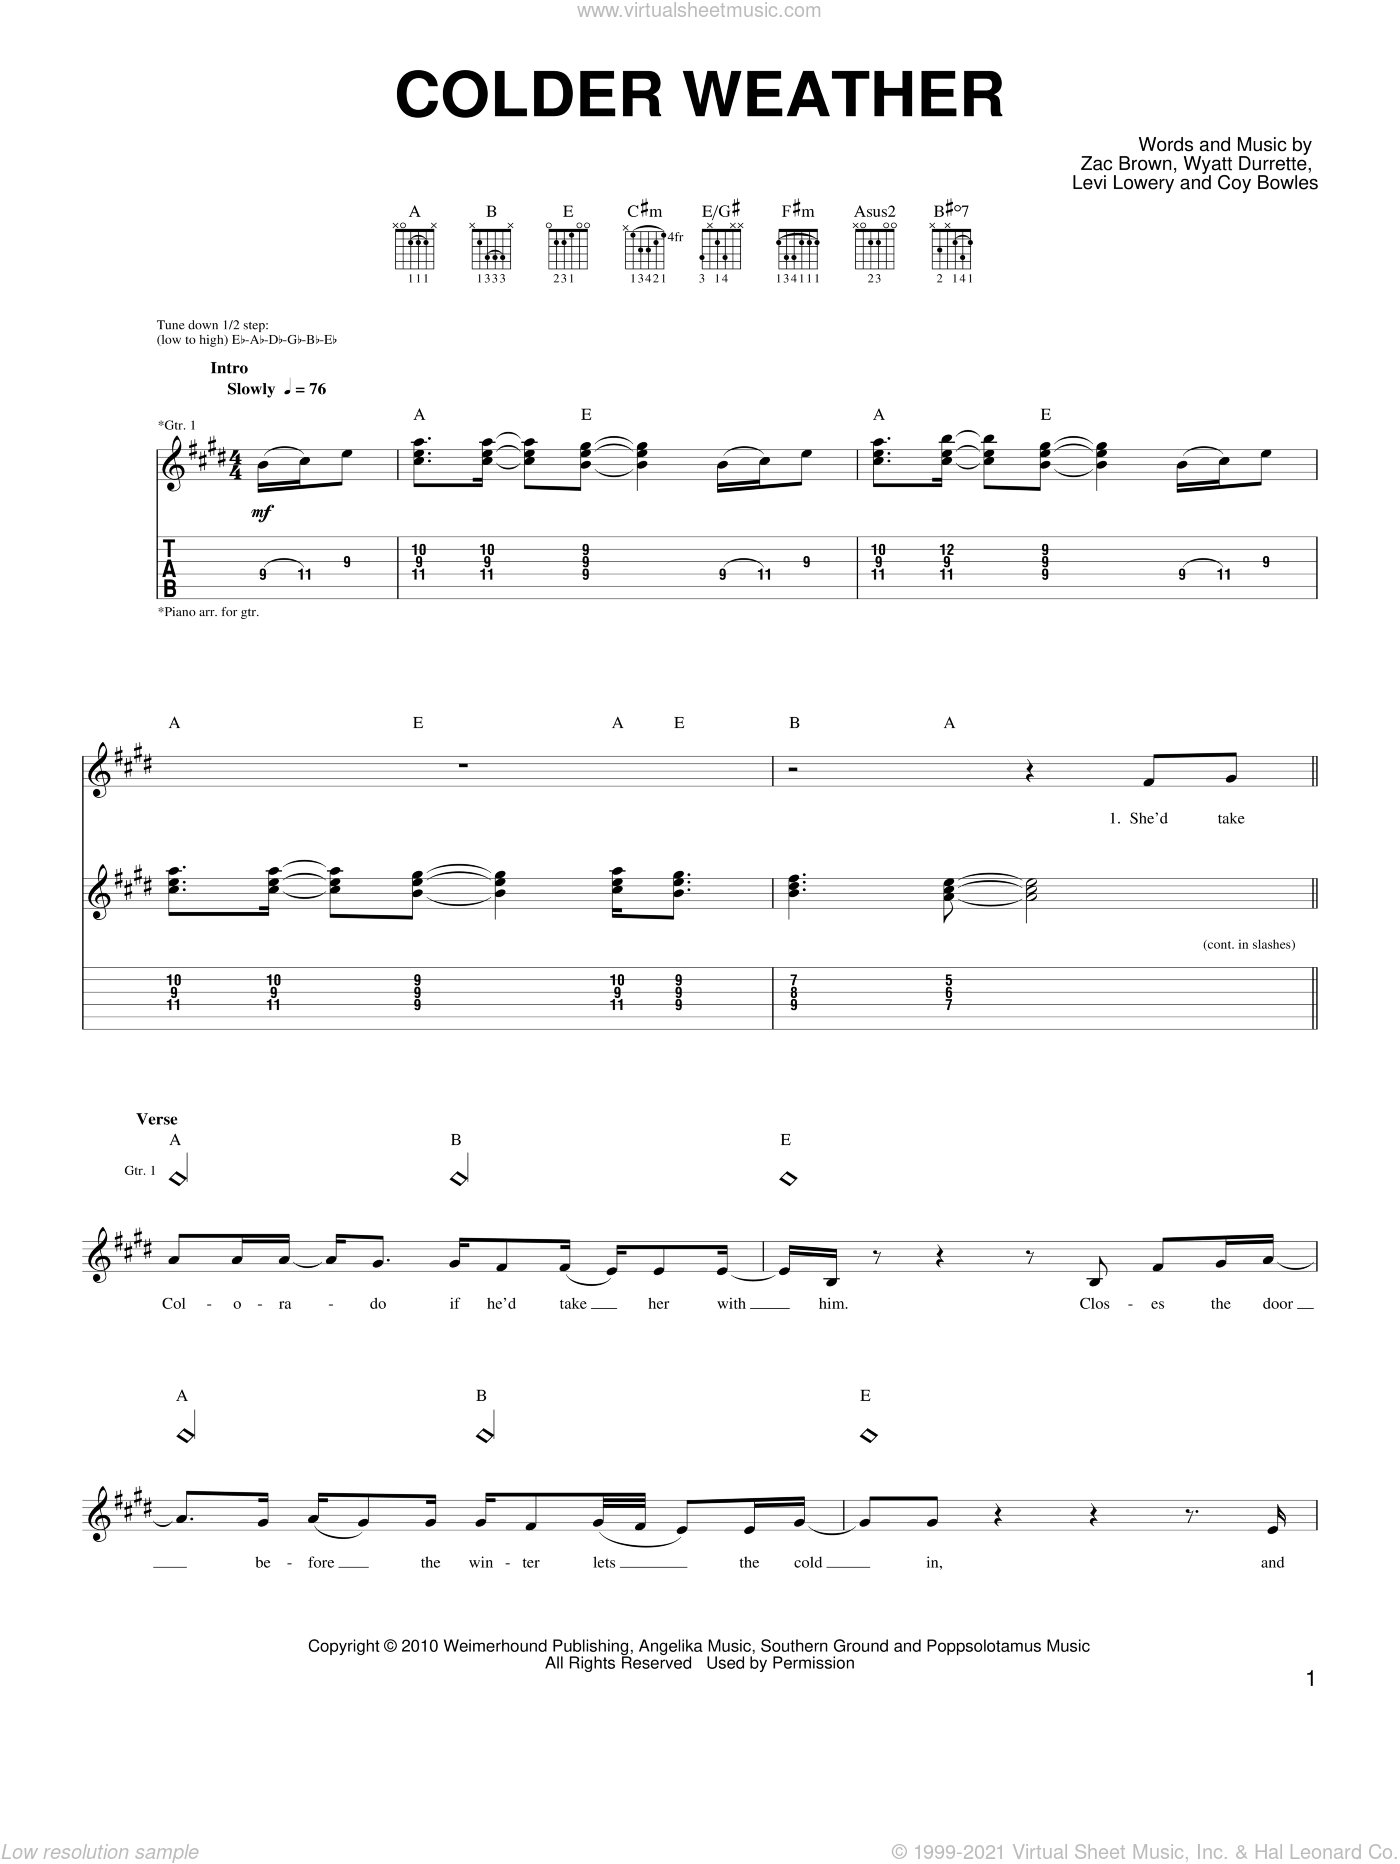 guitar songs pdf